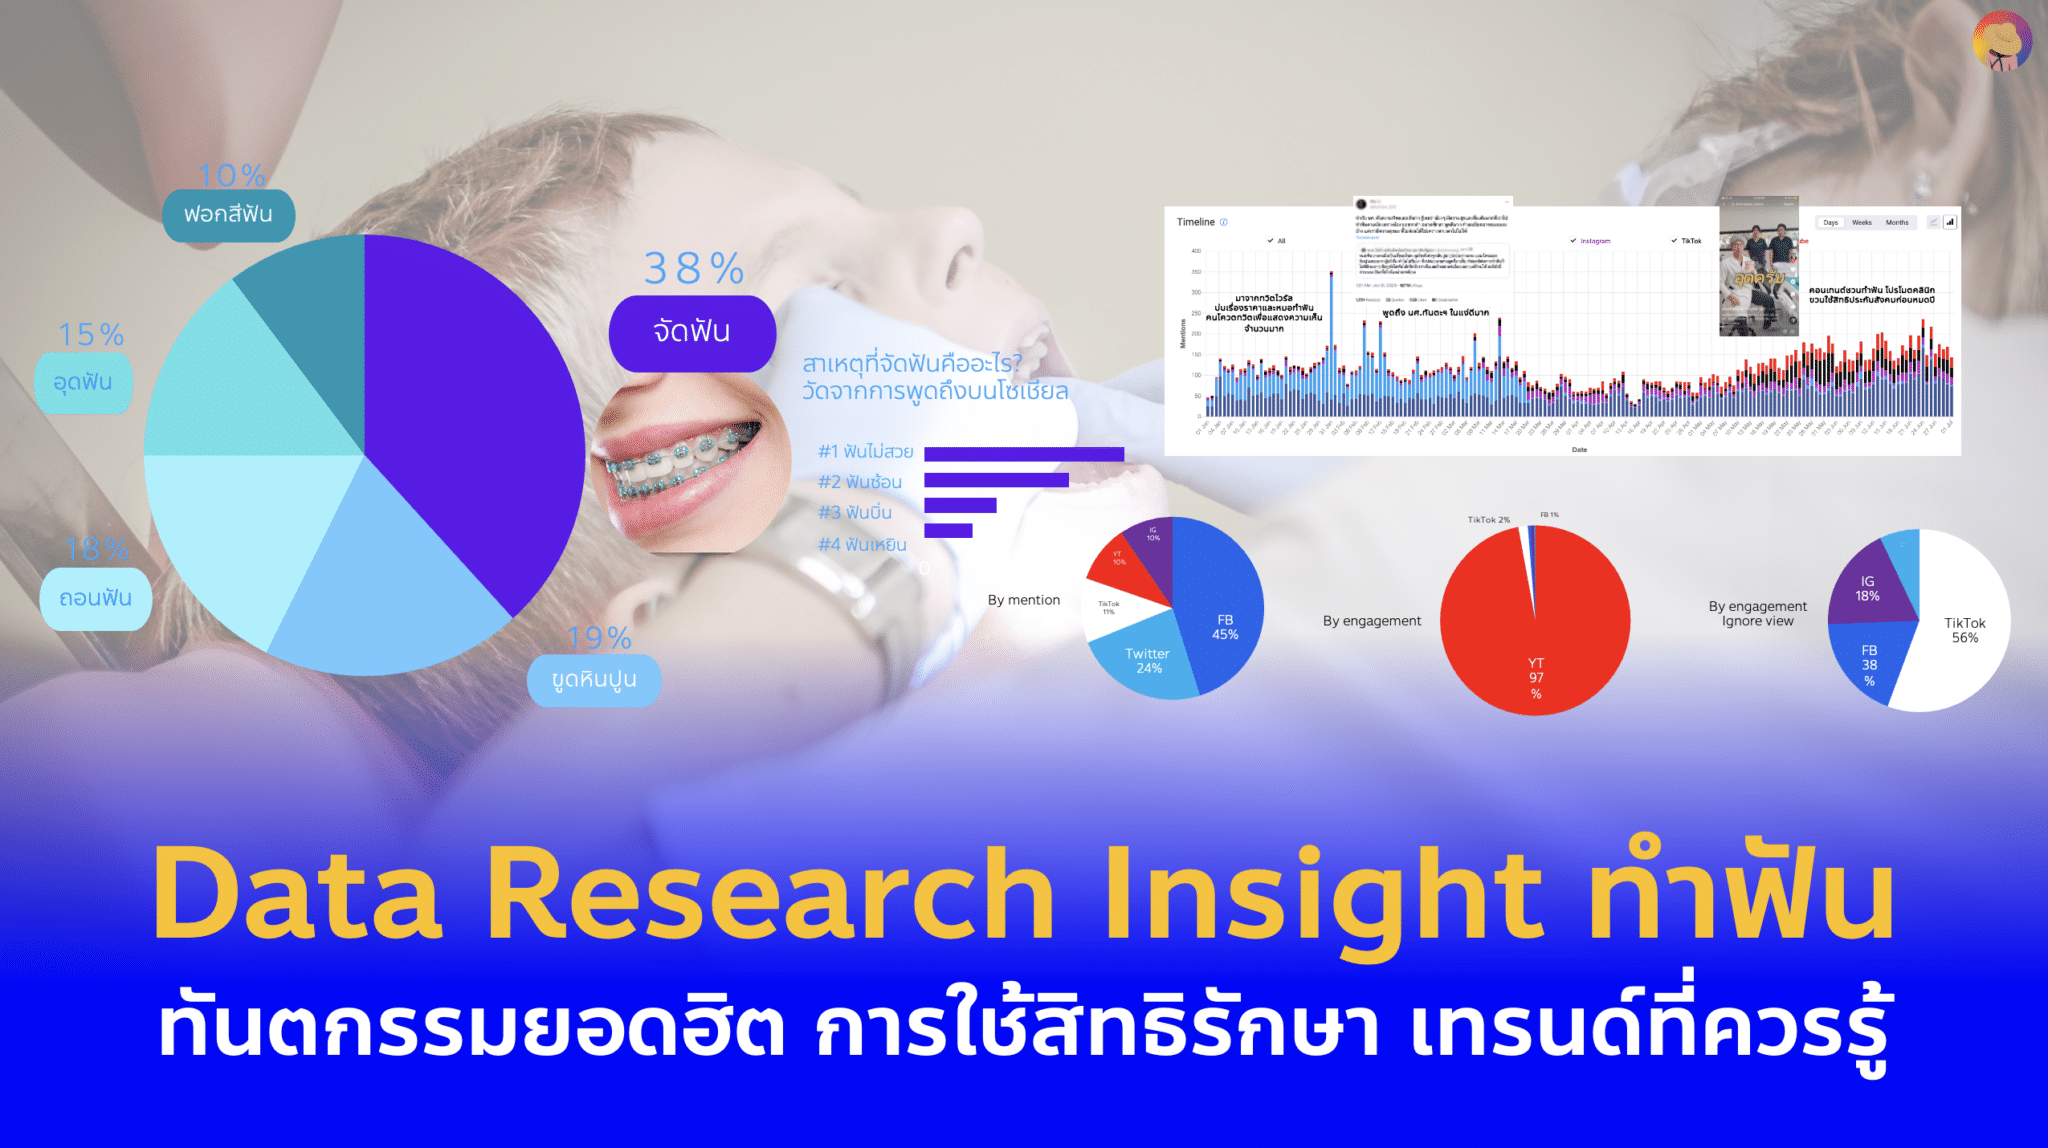 Data Research Insight ทำฟัน – ทันตกรรมยอดฮิต พร้อมเทรนด์ที่ควรรู้